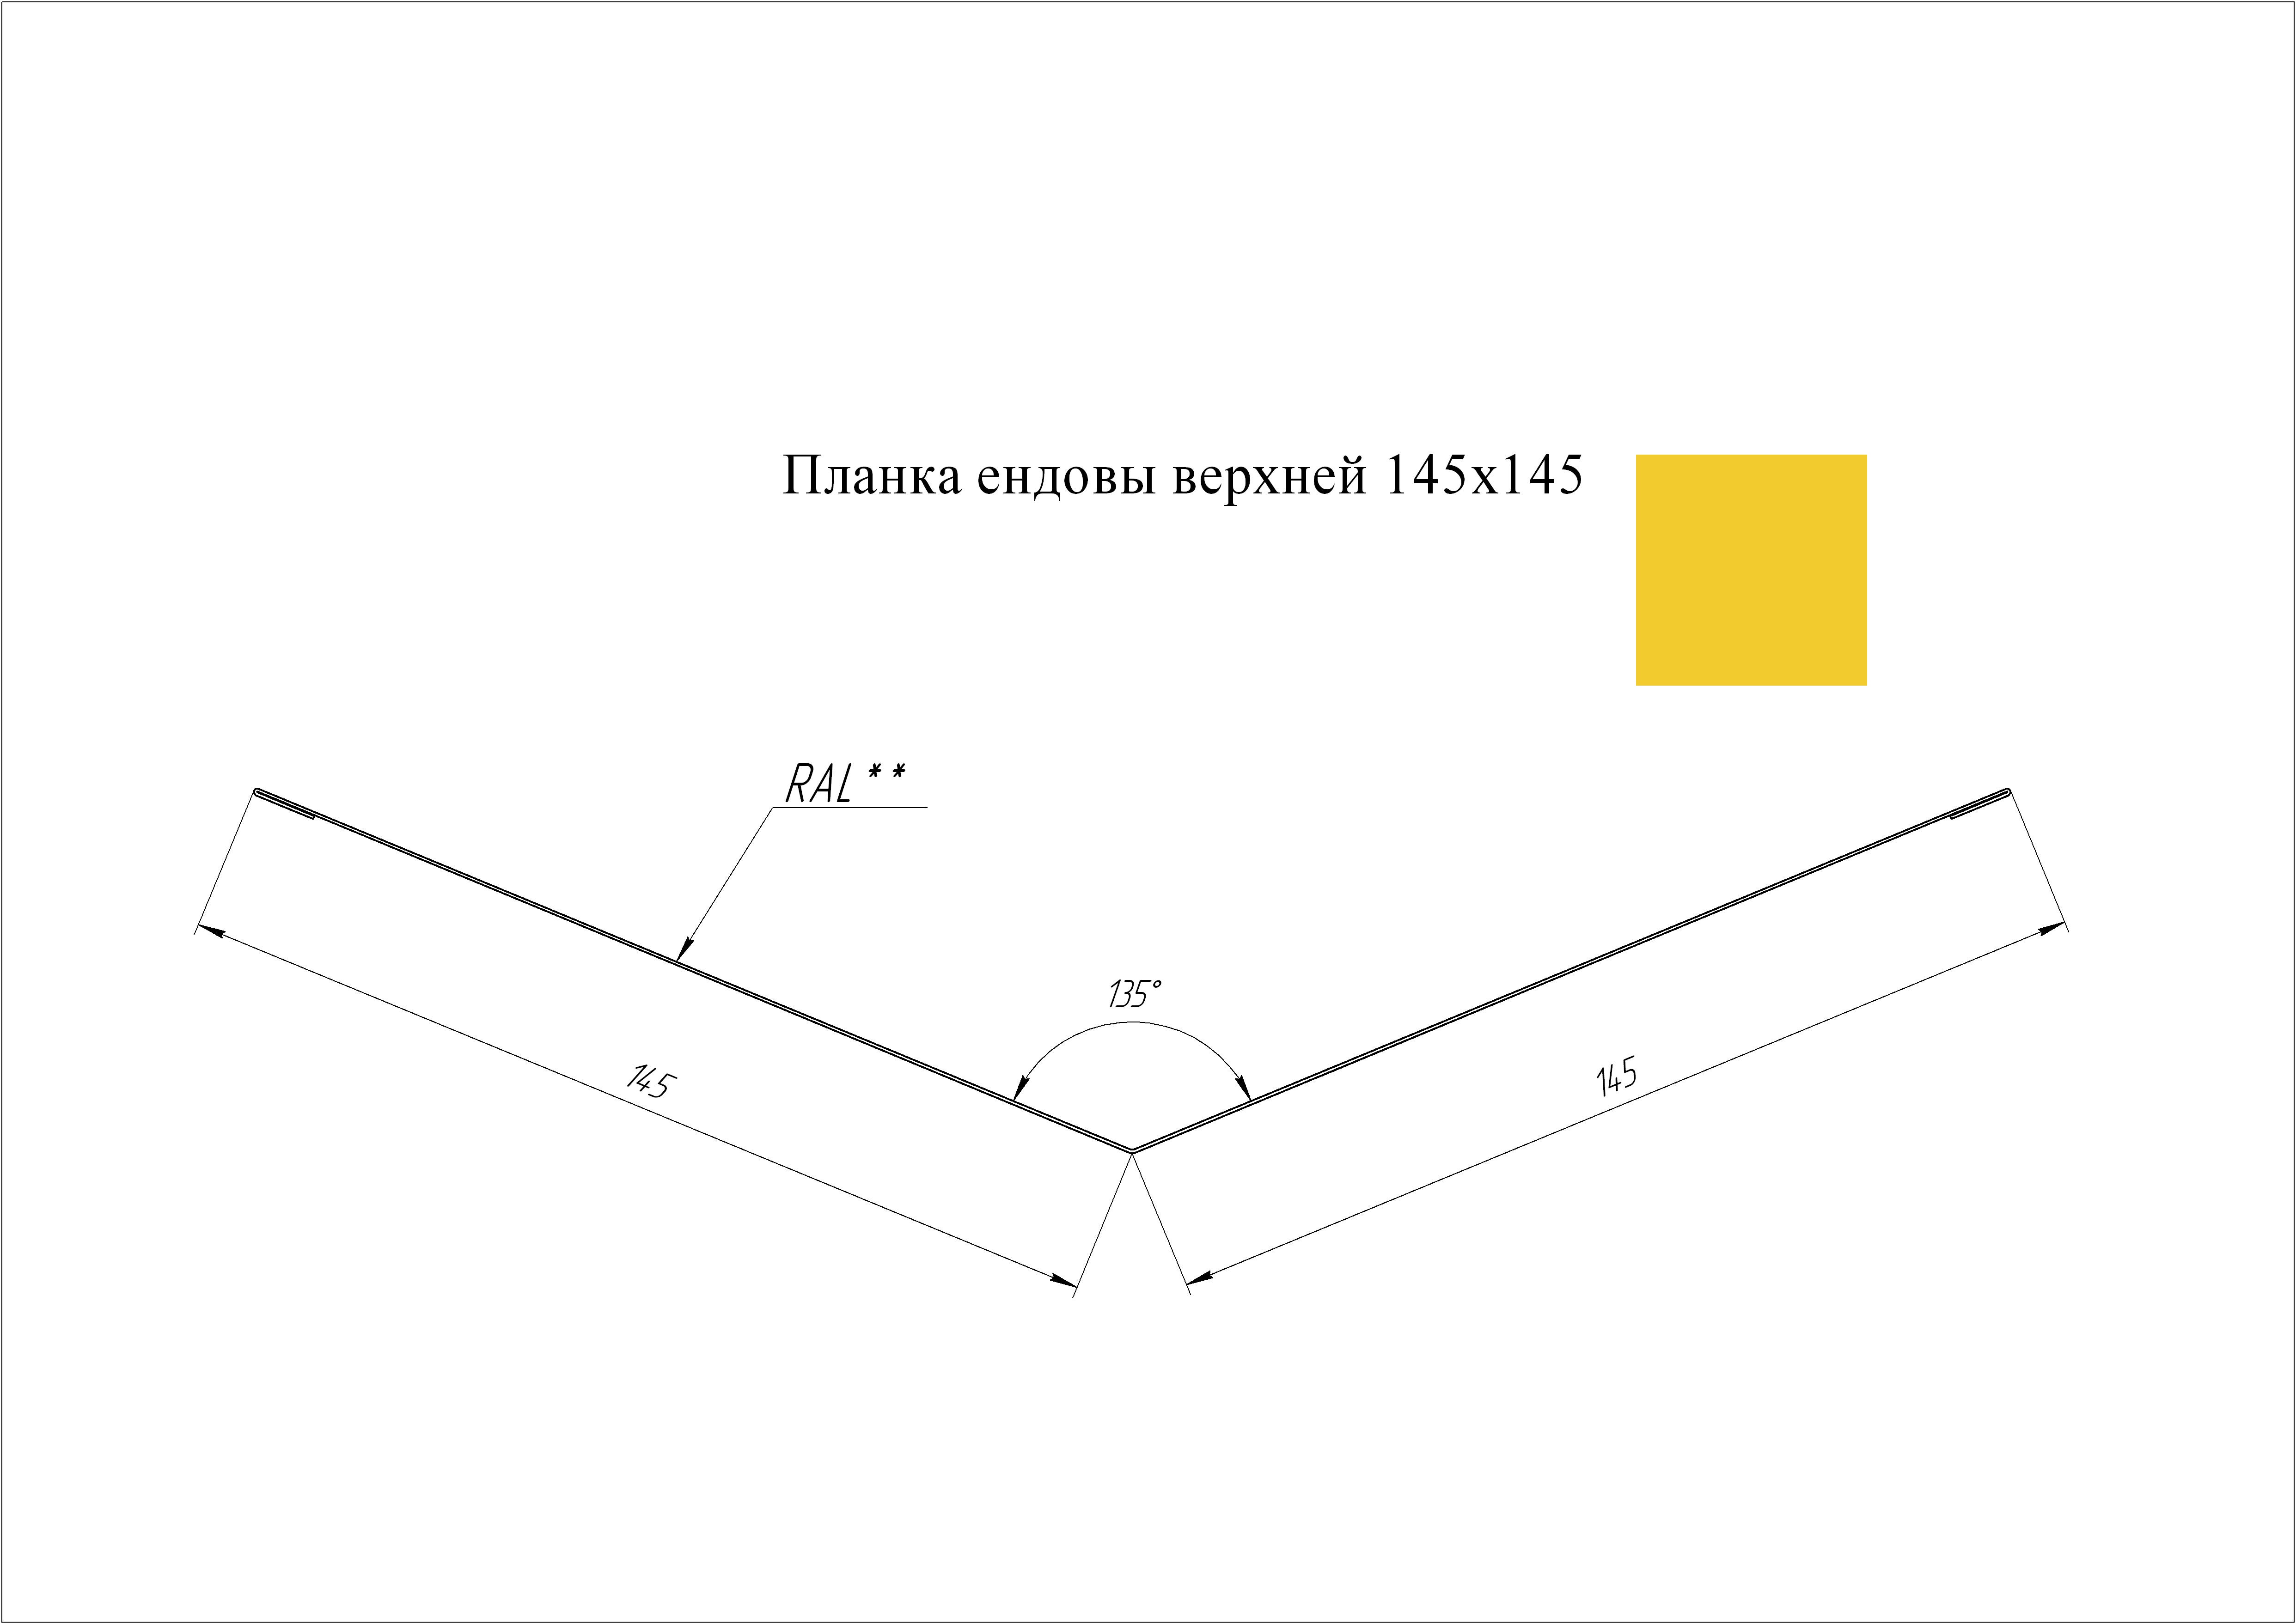 Ендова верхняя 145*145 мм L=2 м GL PE-полиэстер 0,45 RAL 1018 - желтый цинк